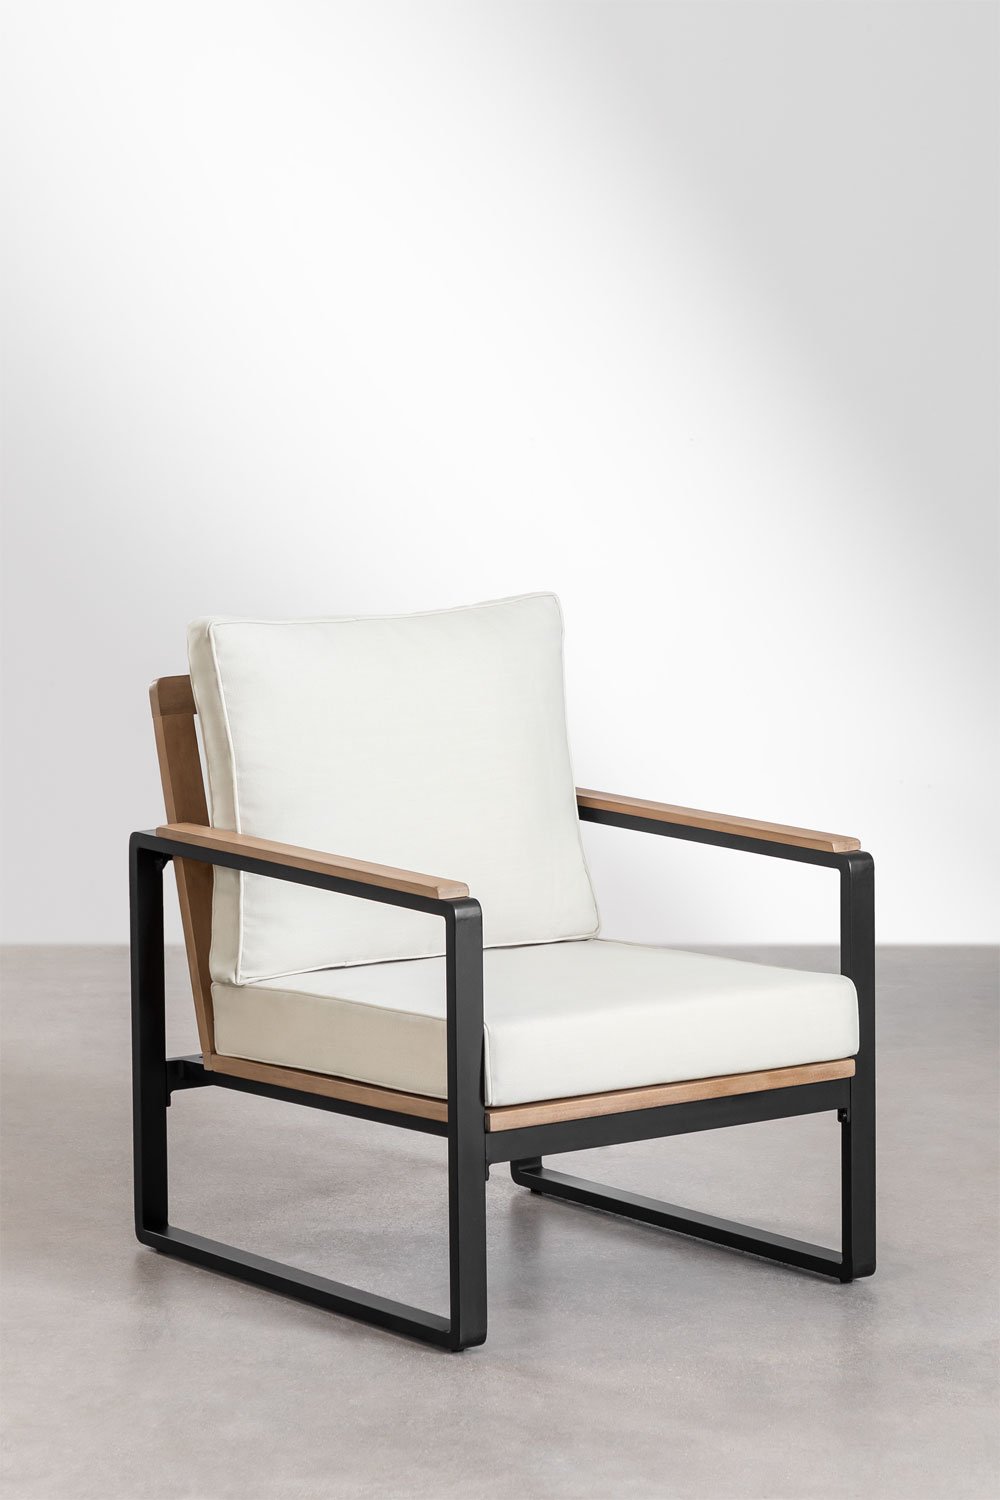 Giselle fauteuil van aluminium en acaciahout, galerij beeld 1